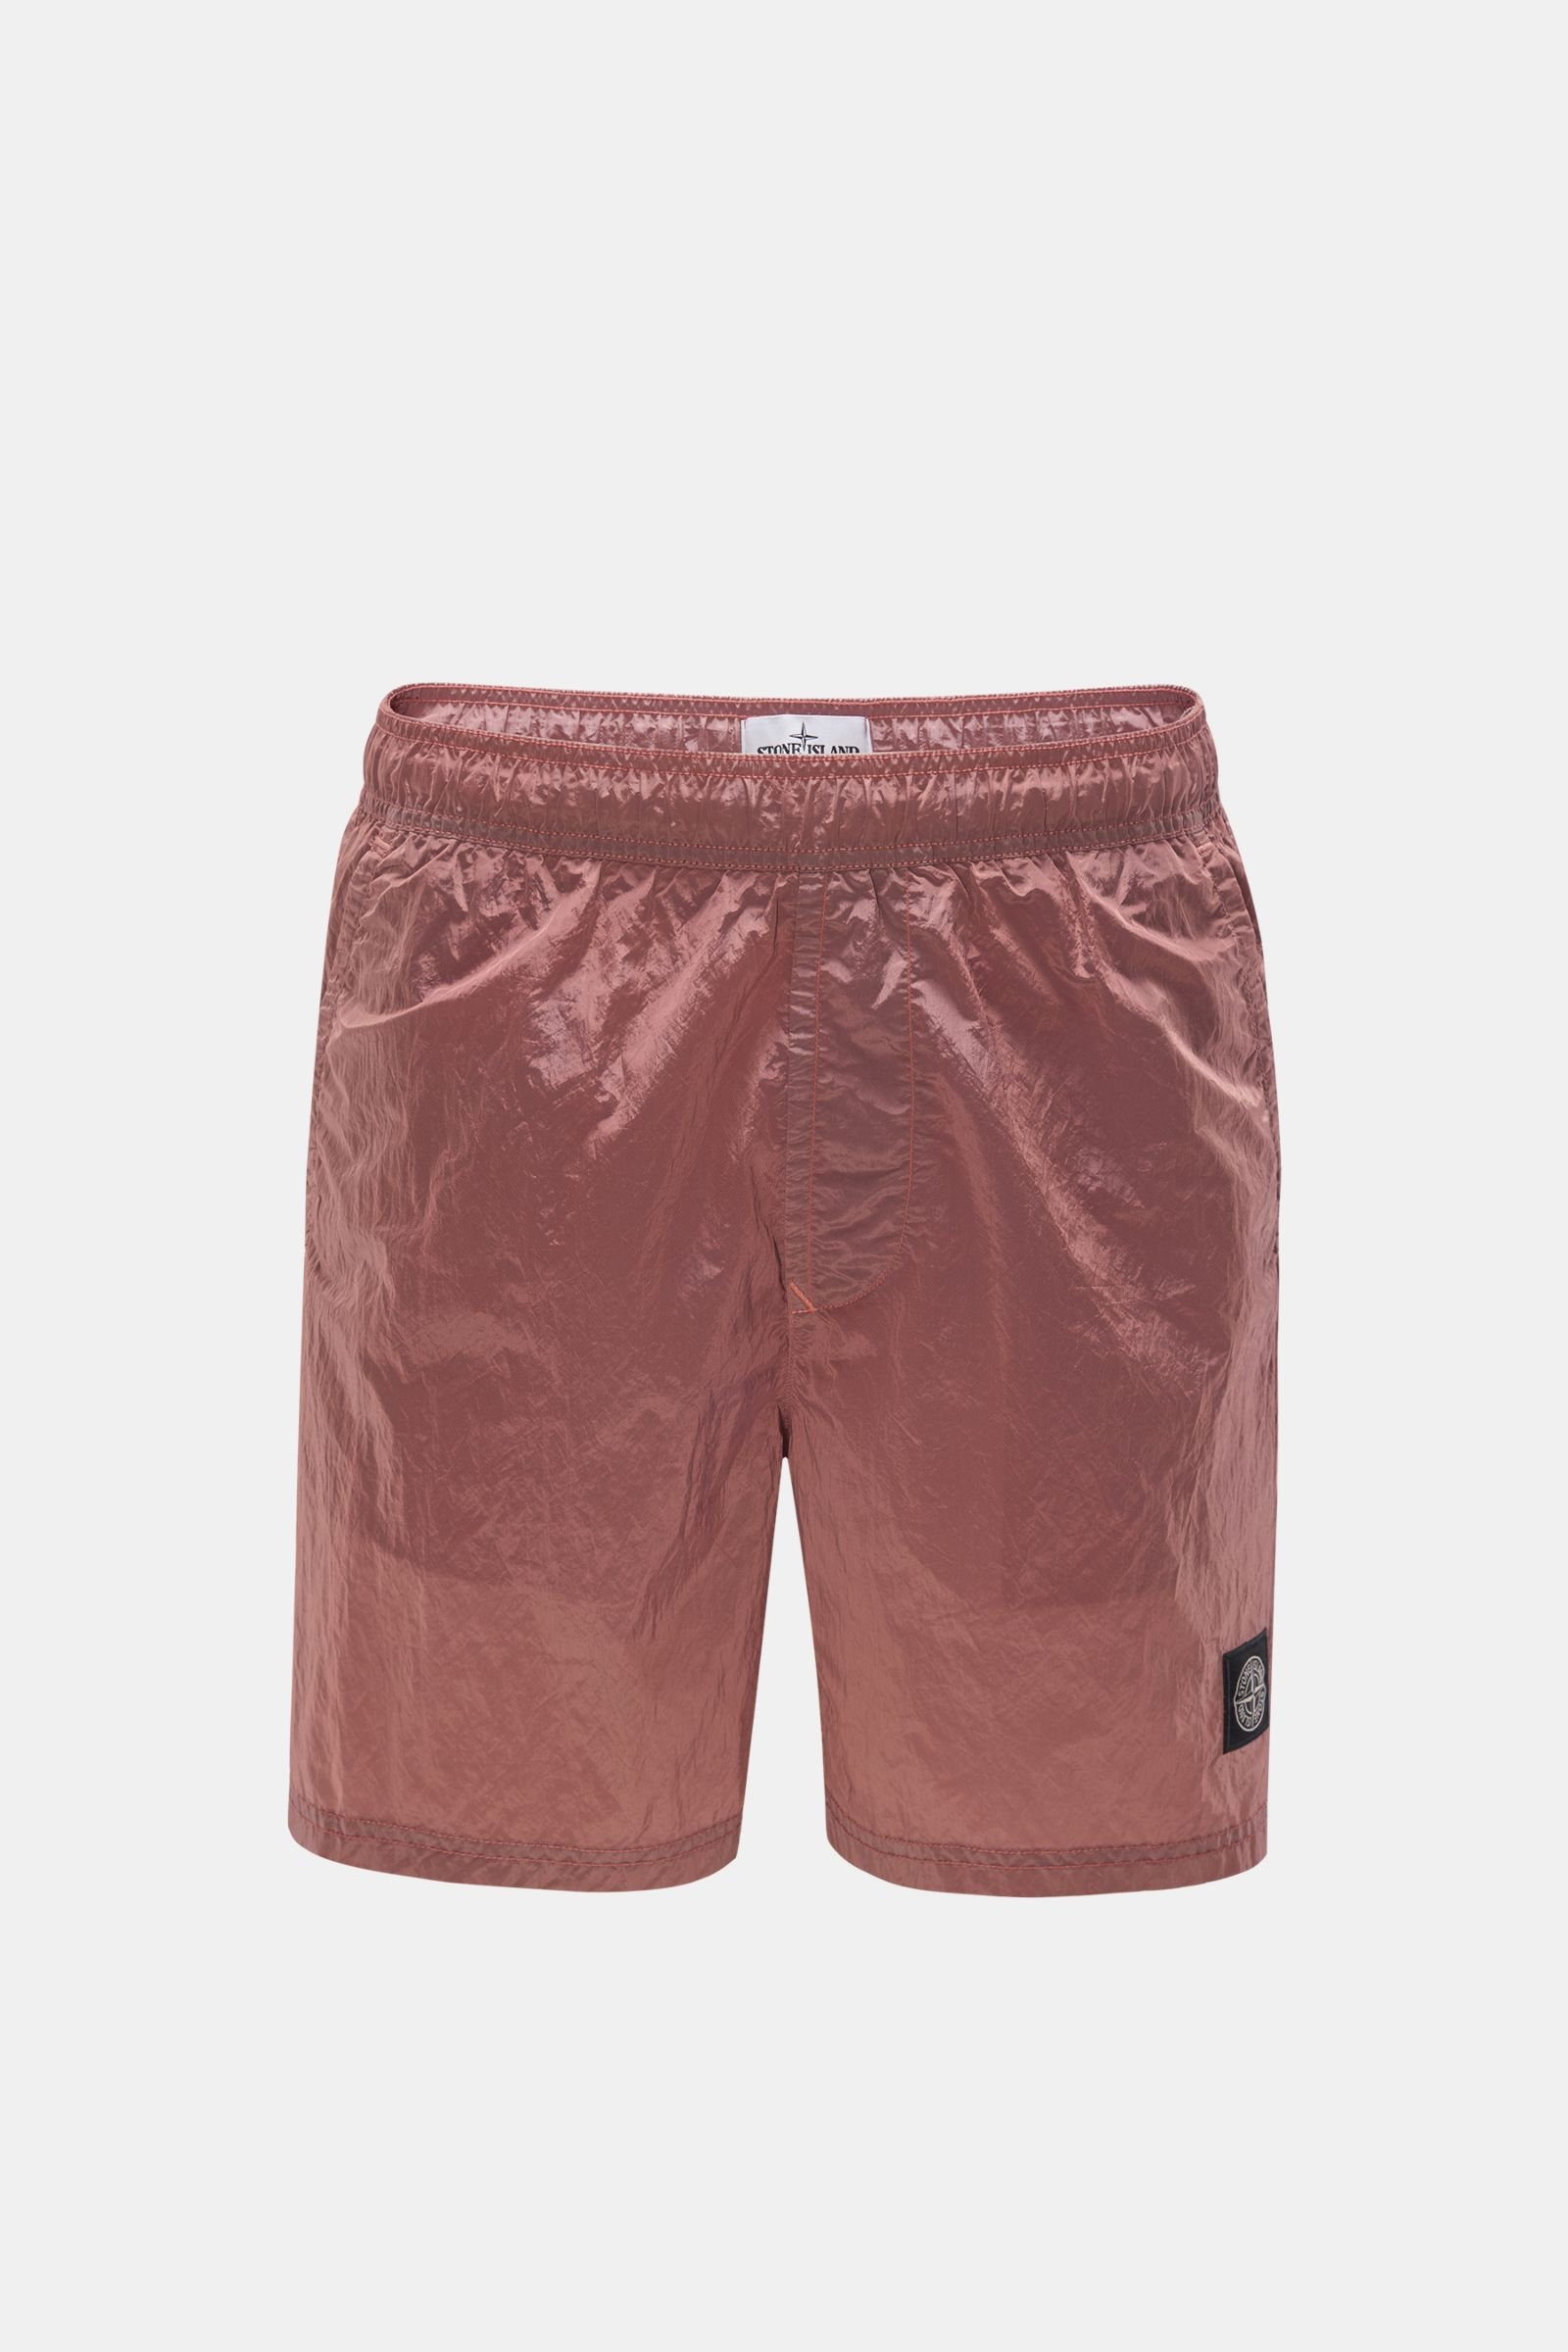 Swim shorts antique pink